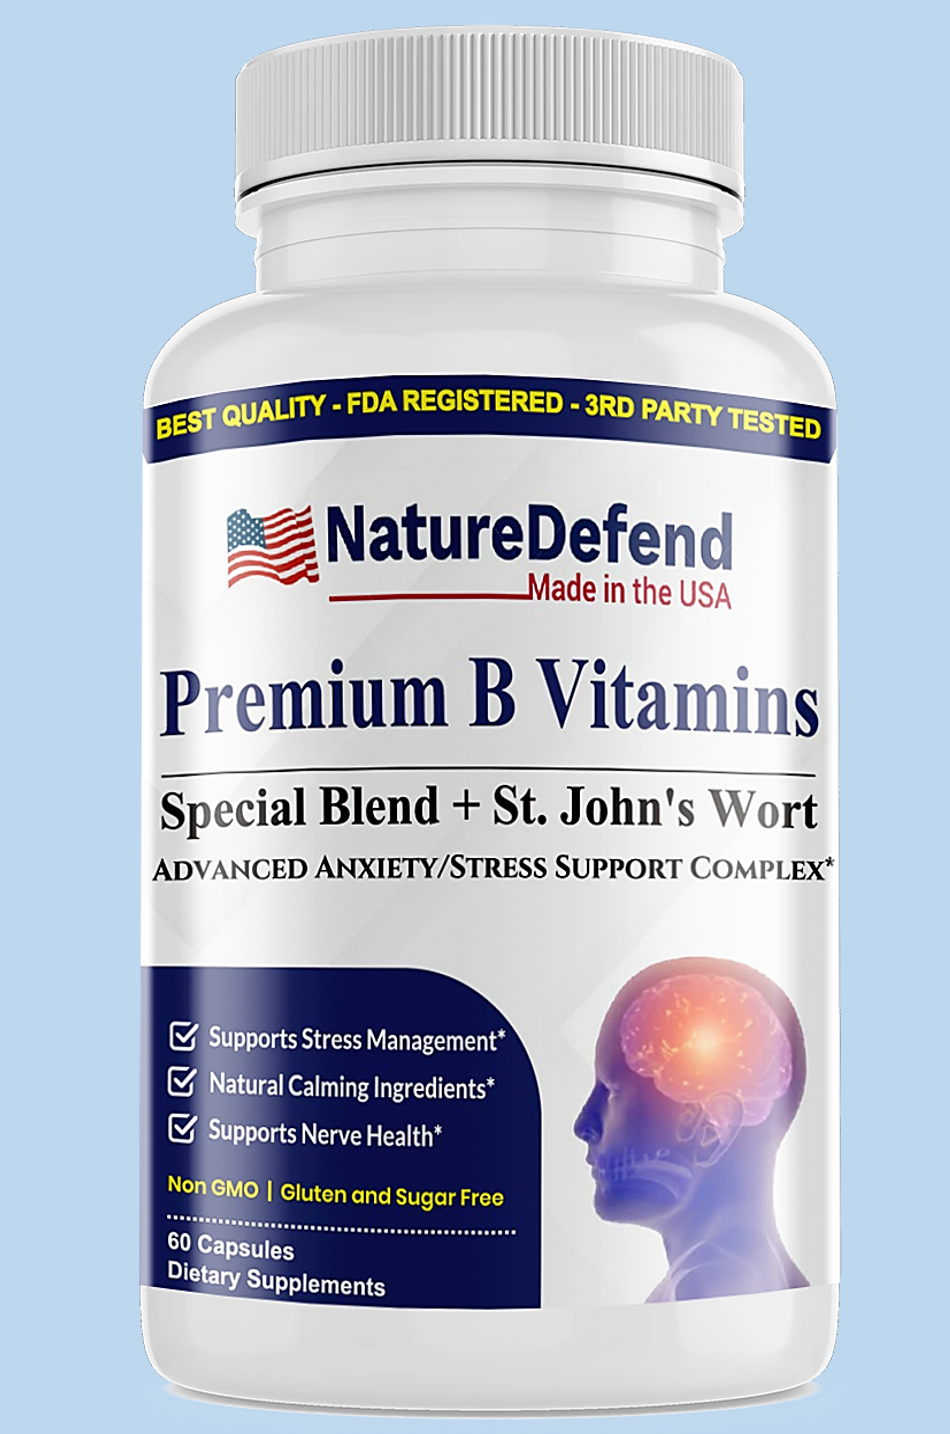 Critical B Vitamins and St. John's Wort